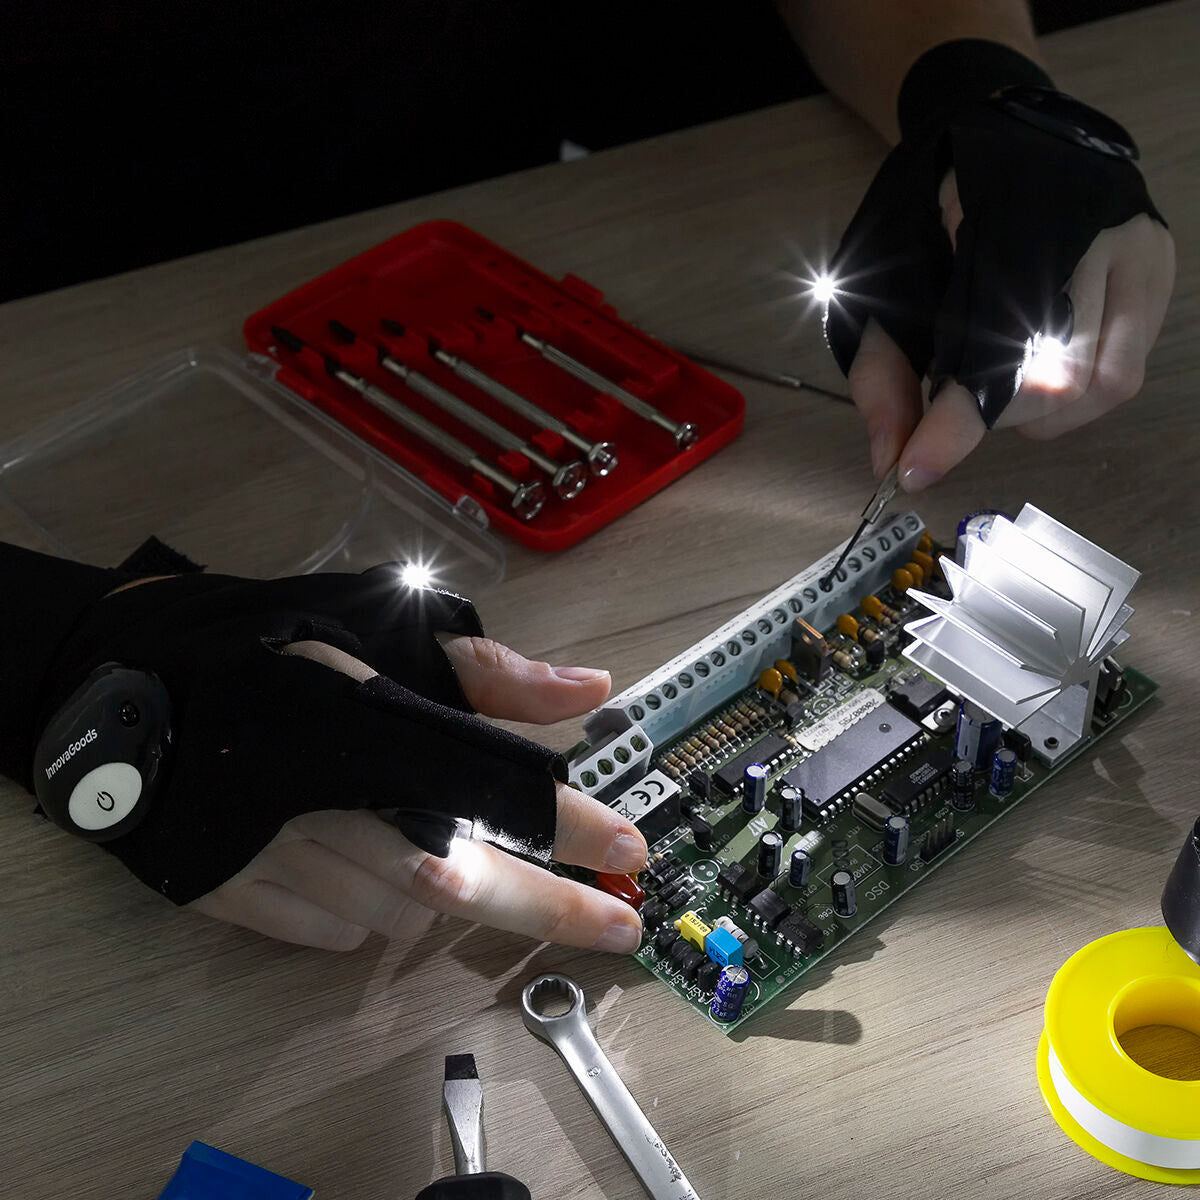 LED-Licht-Handschuhe Gleds InnovaGoods 2 Stück - CA International  